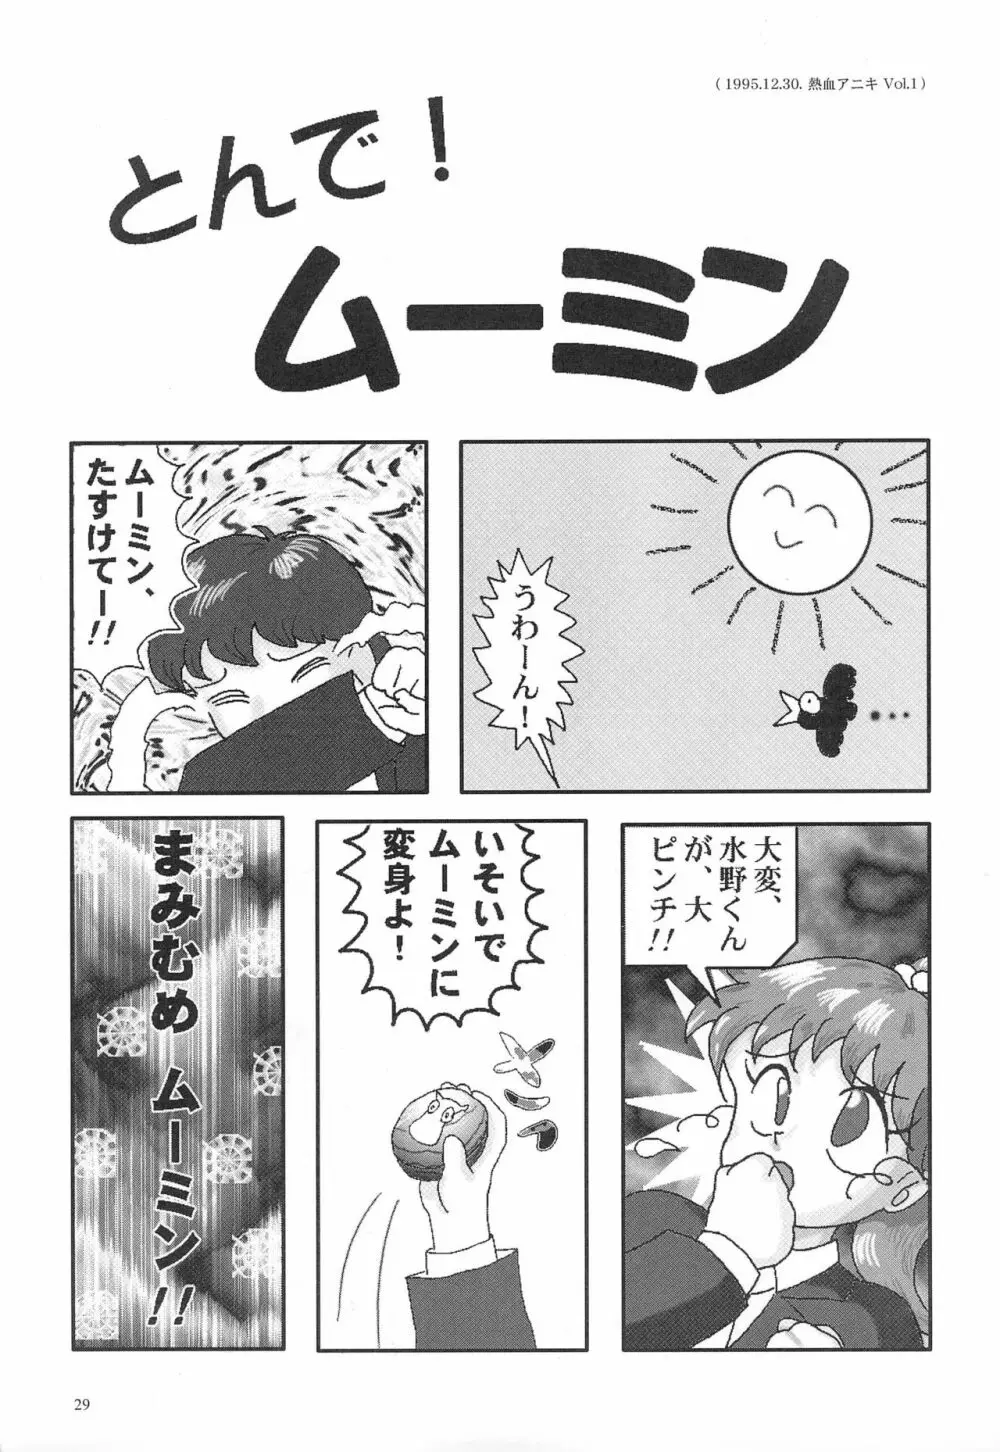 閃虹丸作品集 Vol.1 29ページ